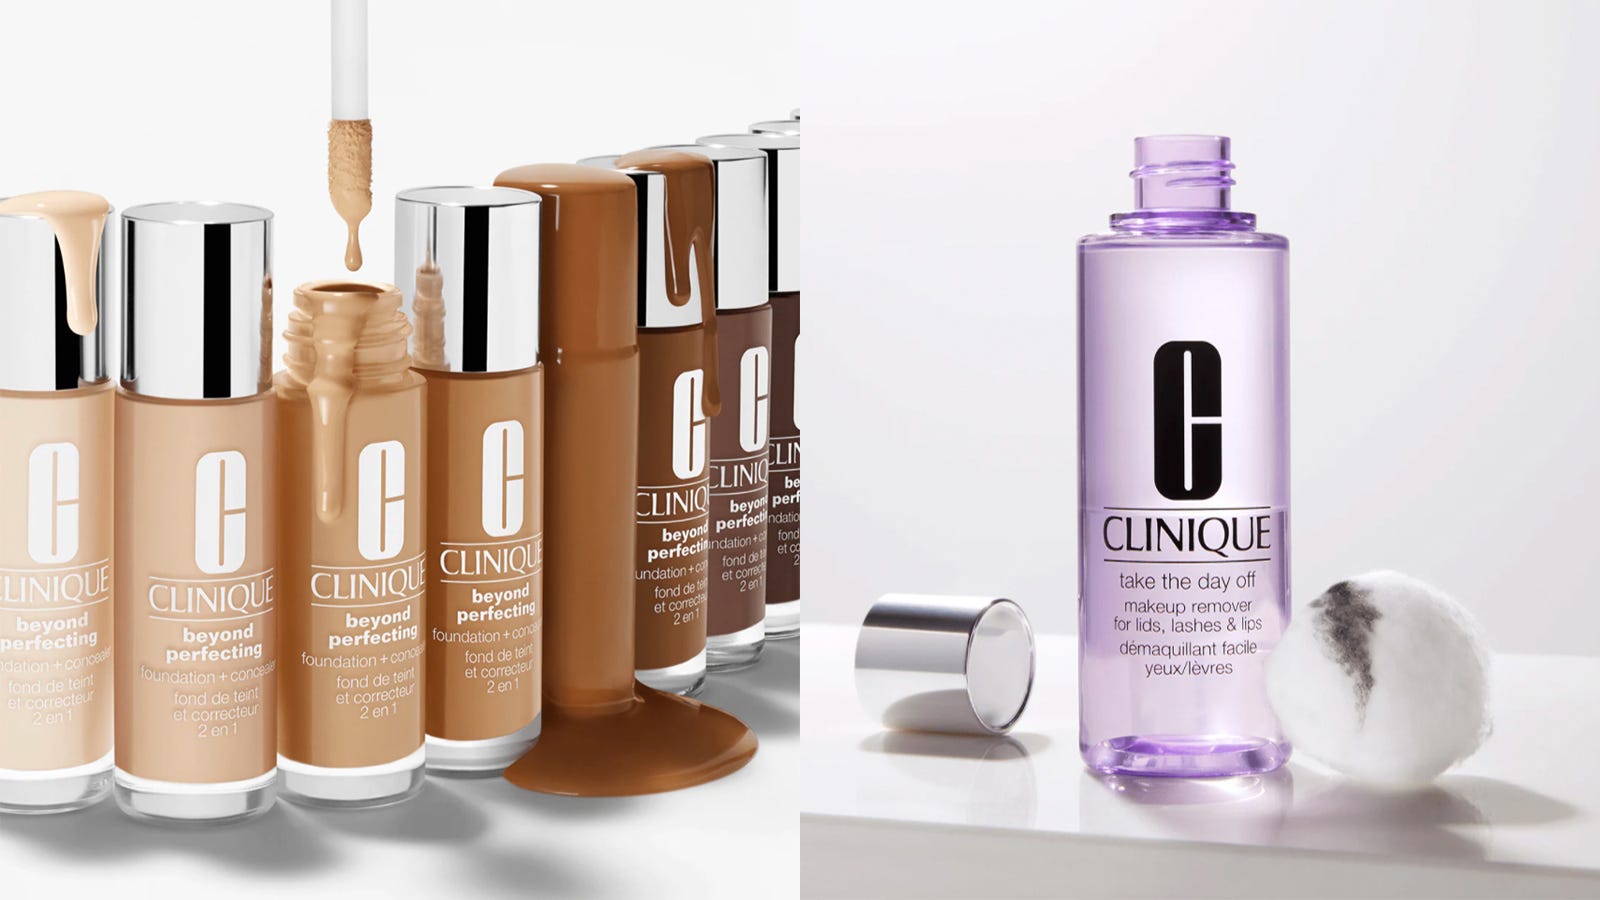 Clinique skincare makeup products